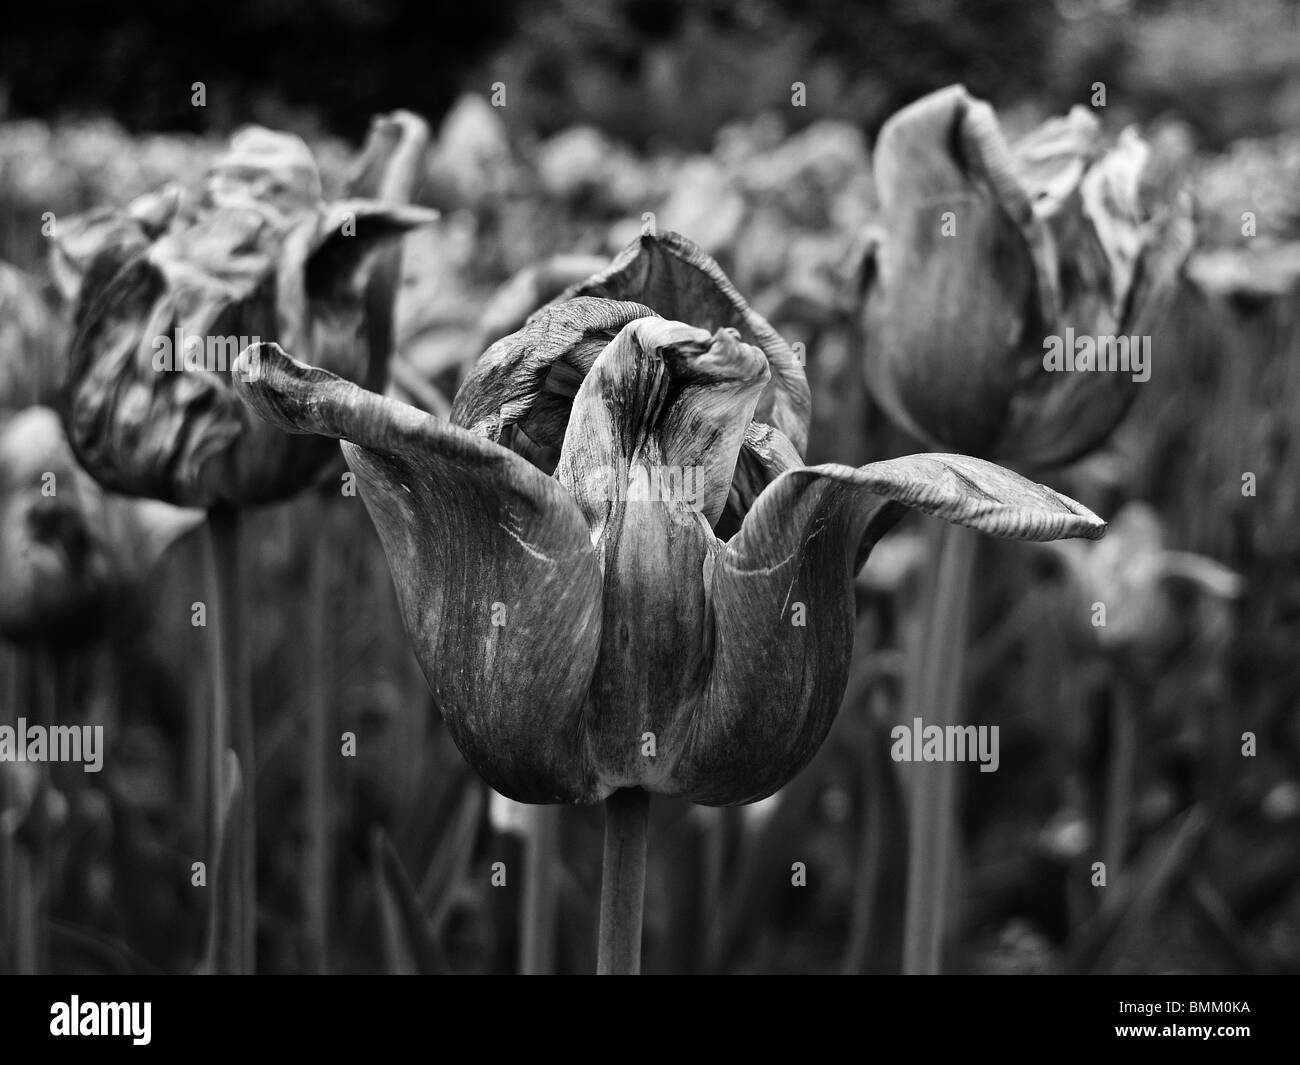 Black And White Nahaufnahme von einem sterbenden Tulpe Trockenblumen. Stockfoto